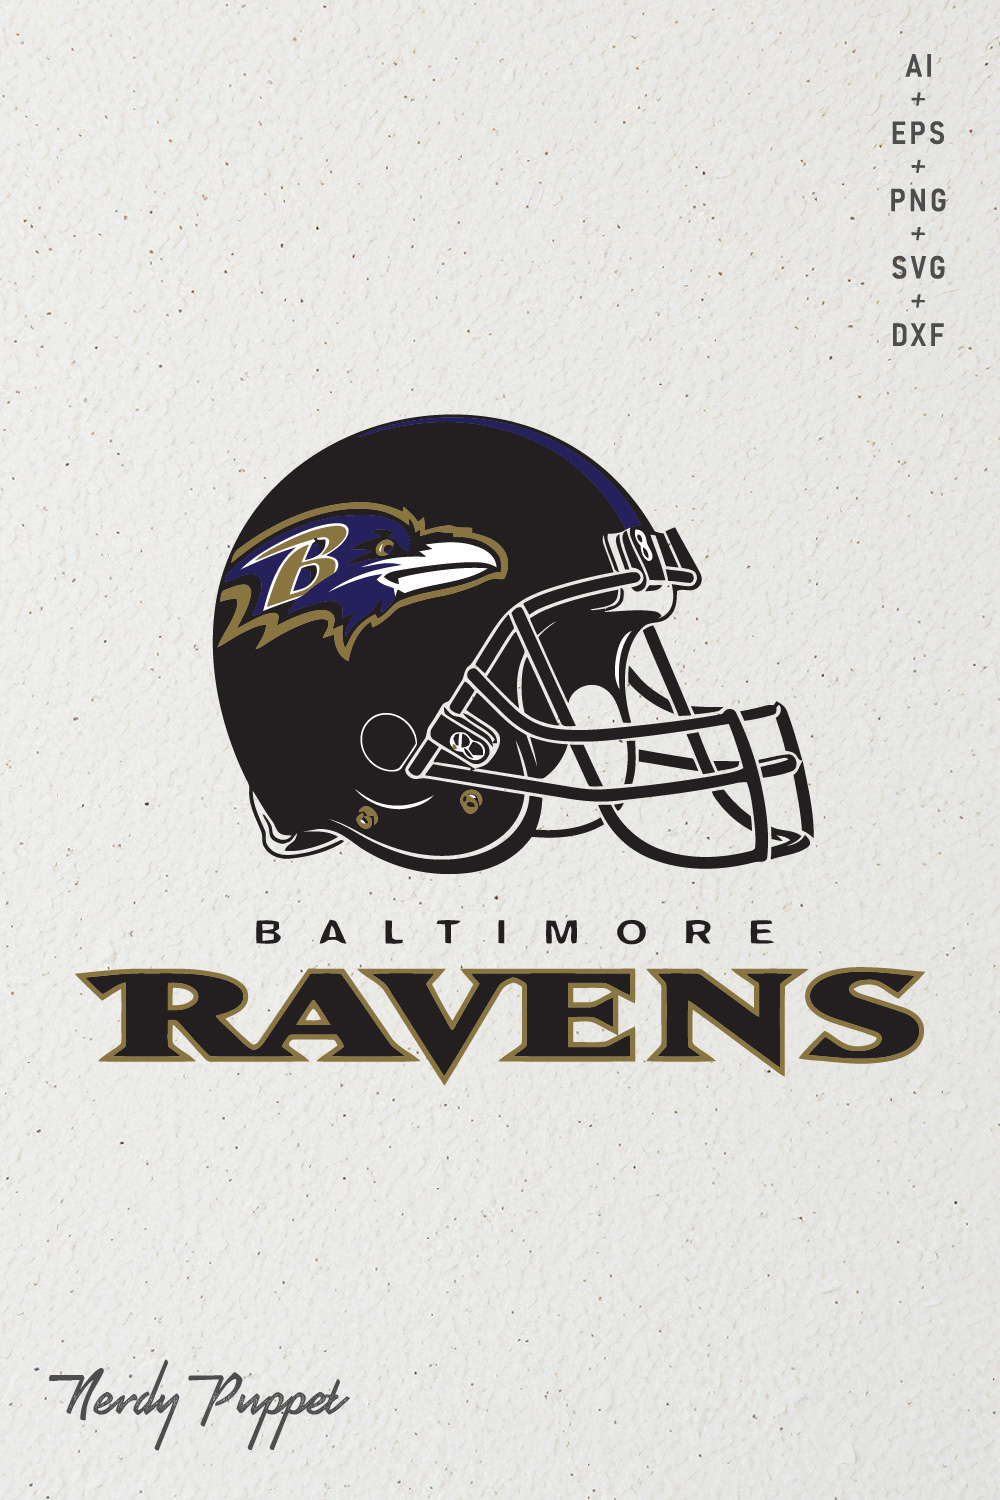 Baltimore Ravens 04 pinterest preview image.